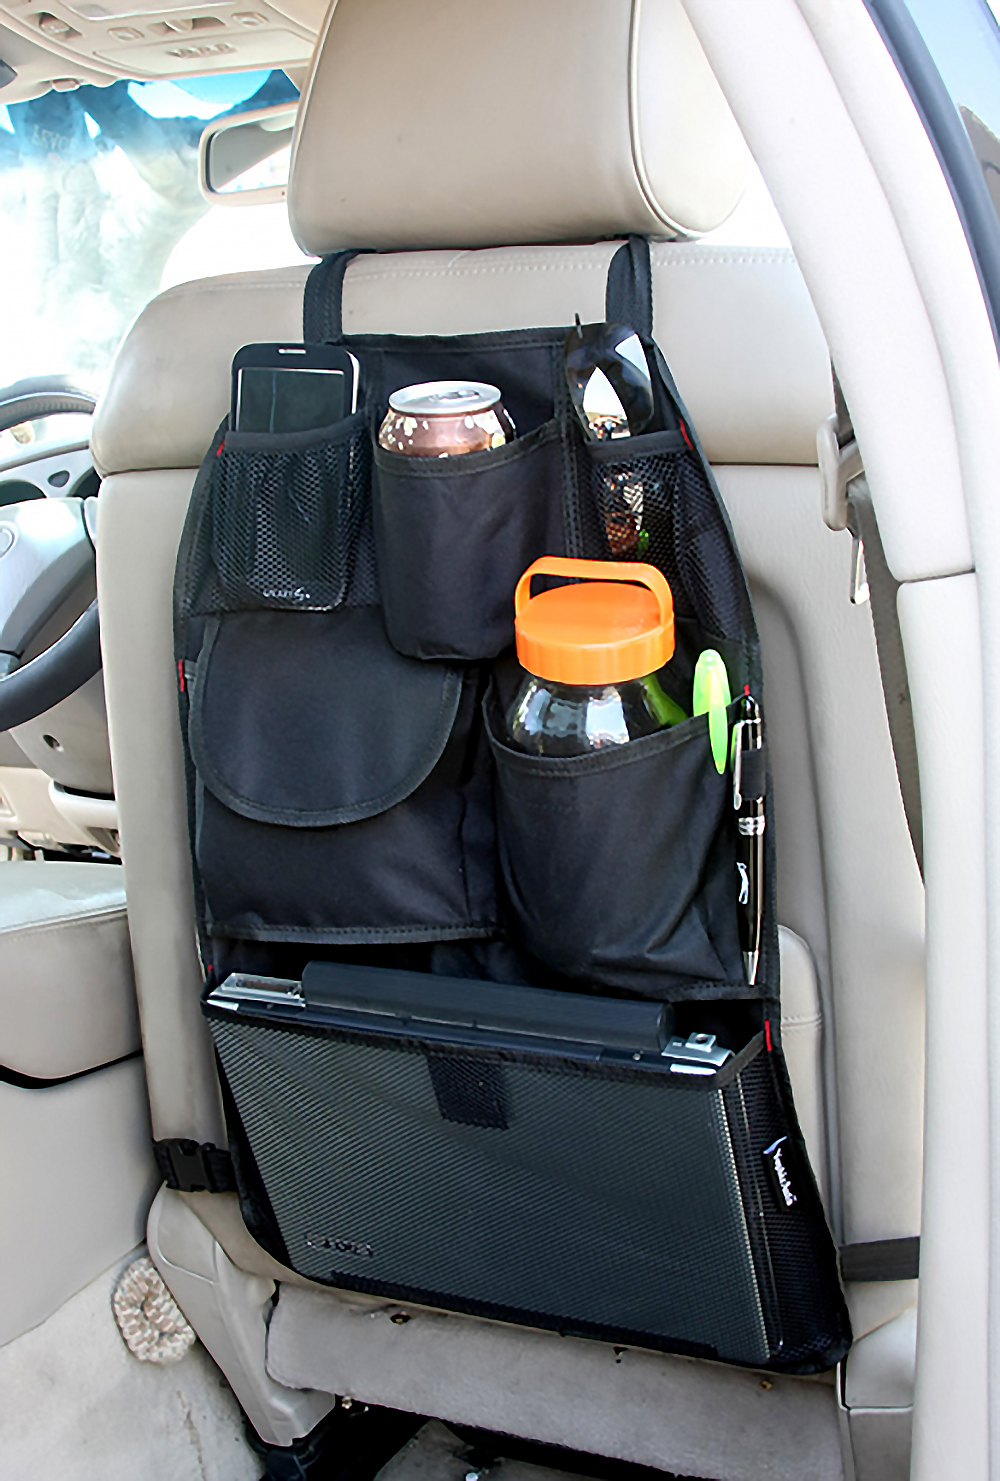 YupbizAuto Car Auto Front/Back Seat Organizer Cell Phone Holder Multi-Pocket Travel Storage Bag, Black Color - image 1 of 6